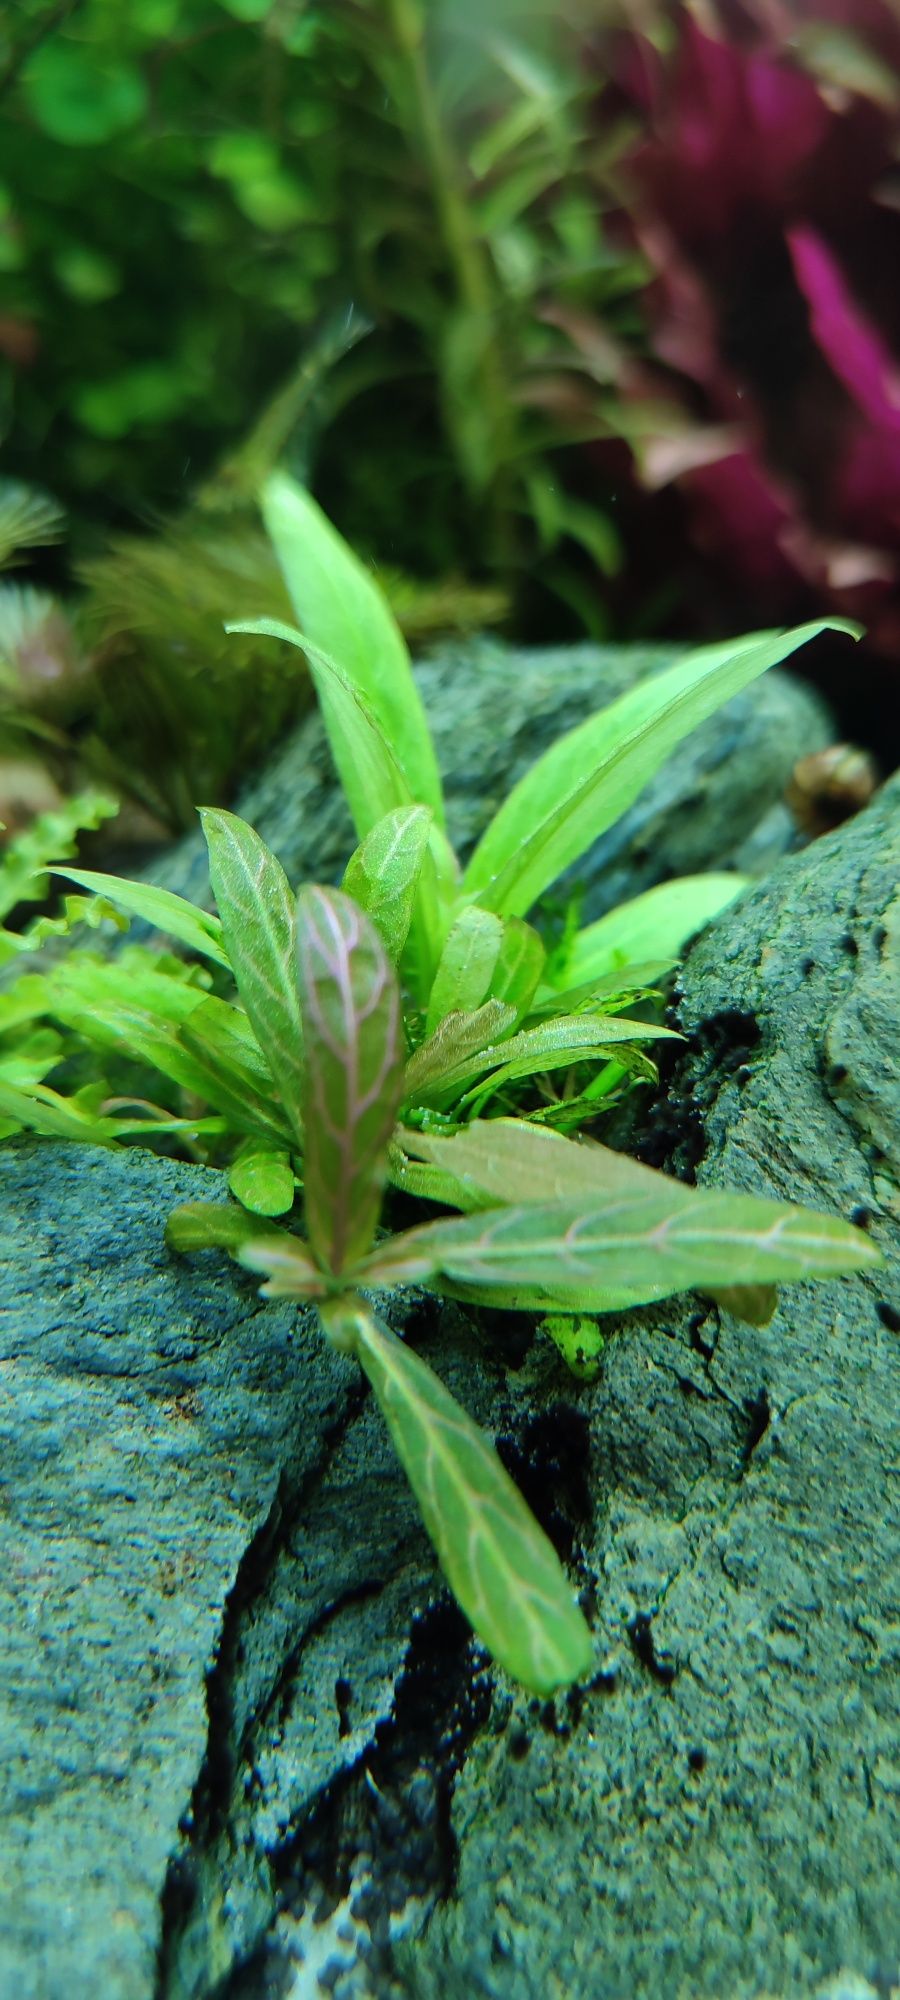 Hygrophila polysperma Rosanervig roślina do akwarium.